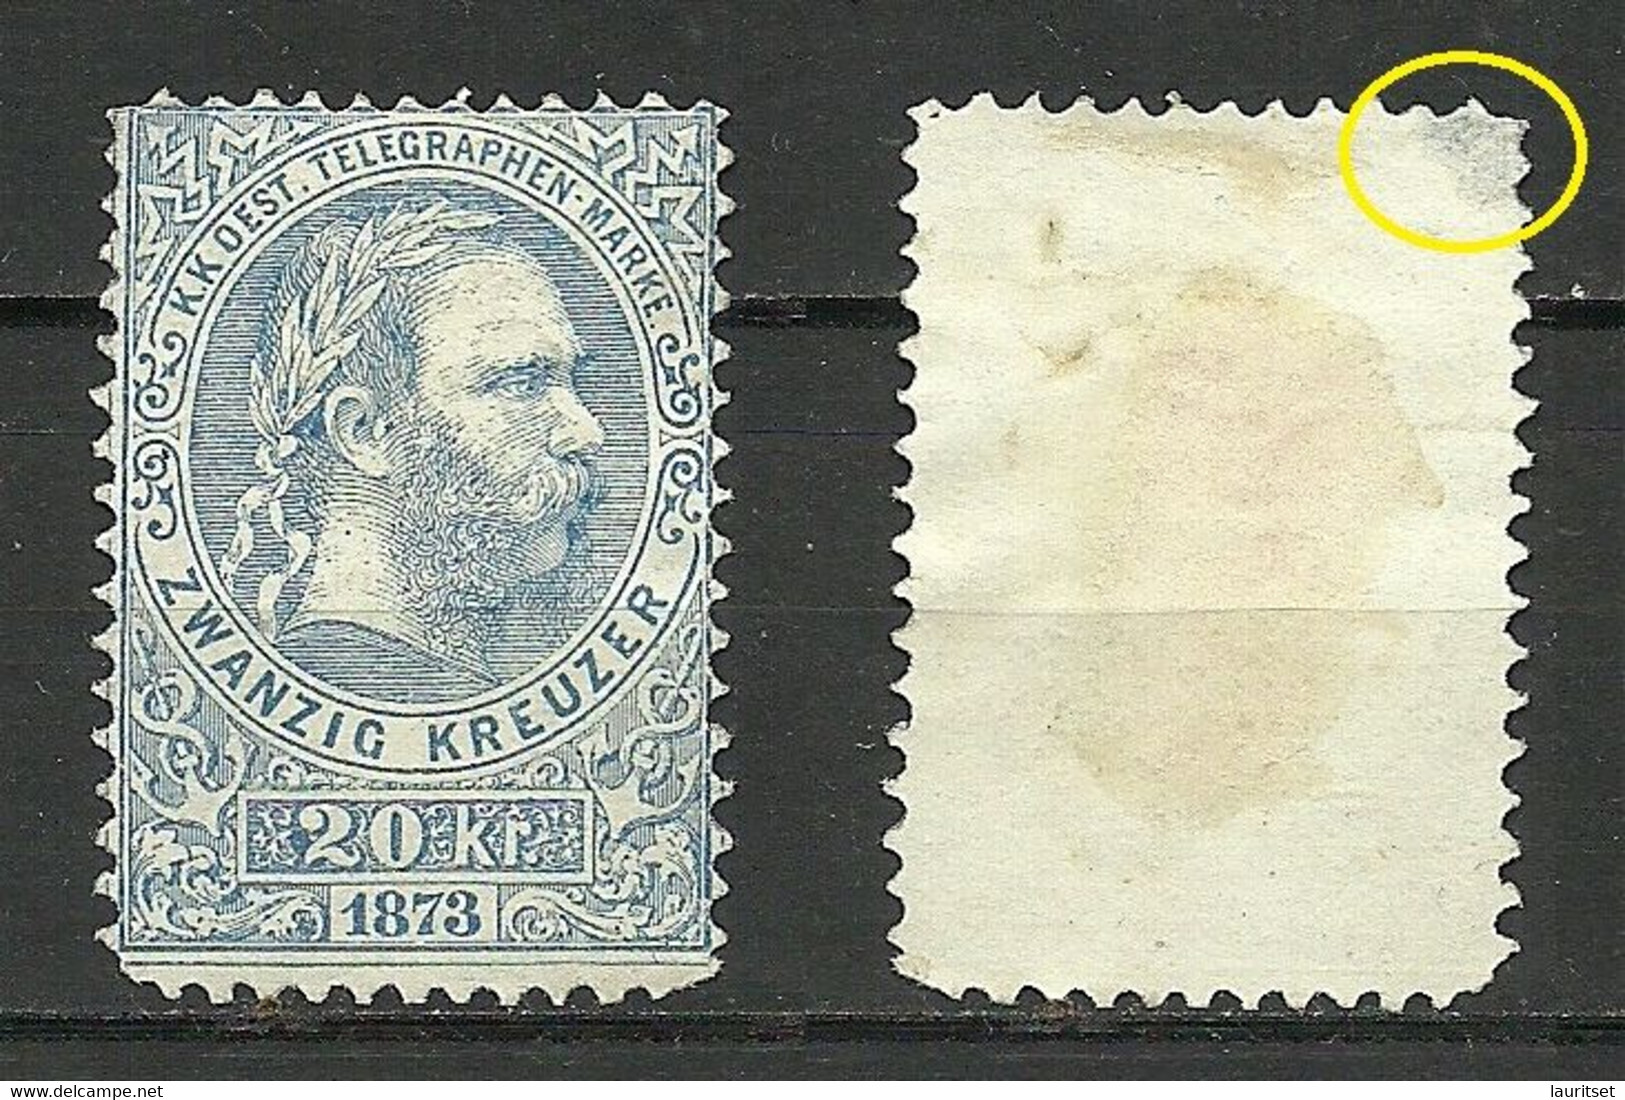 Österreich Austria 1873 Keiser Franz Joseph Telegraphenmarke 20 Kr. (*) Telegraph NB! Thinned Upper Corner! - Telegraphenmarken